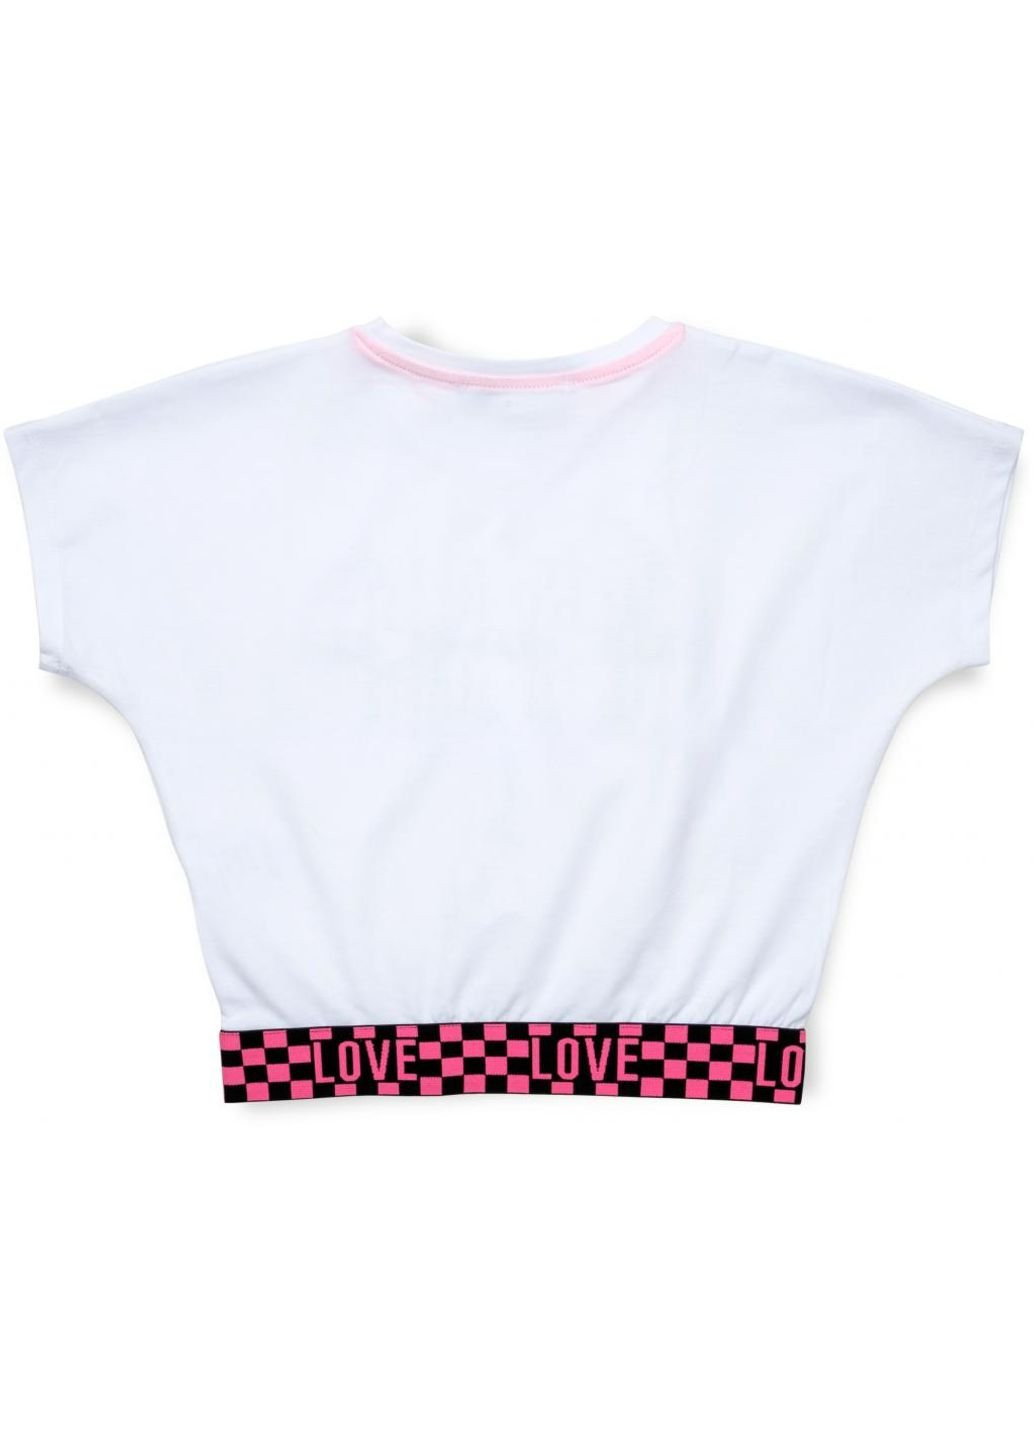 Белая демисезонная футболка детская укороченная (4114-140-white) A-yugi